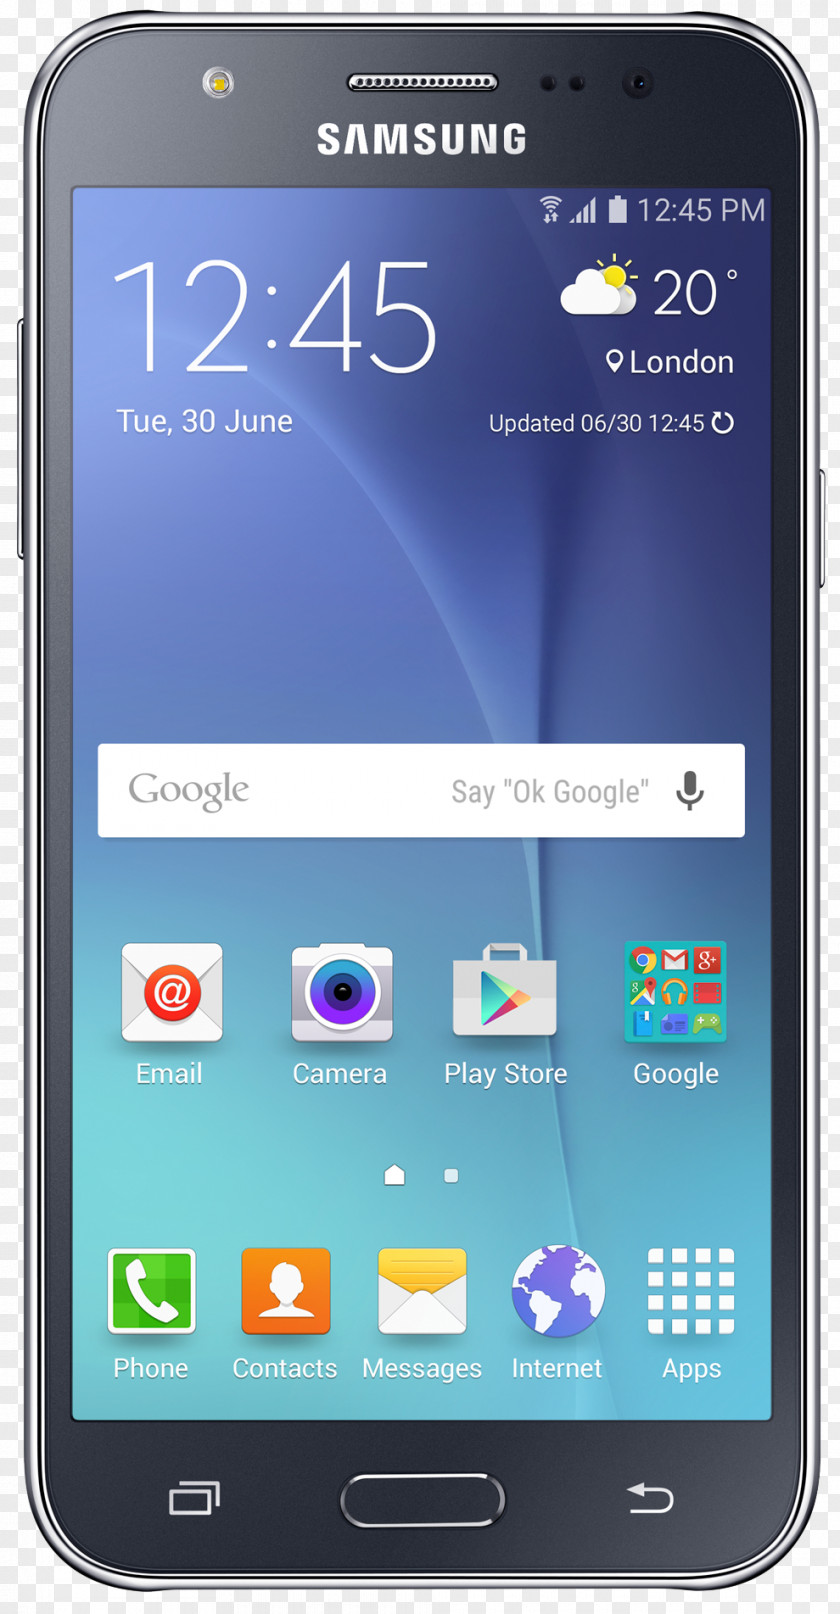 Samsung Galaxy J5 J7 (2016) Smartphone PNG